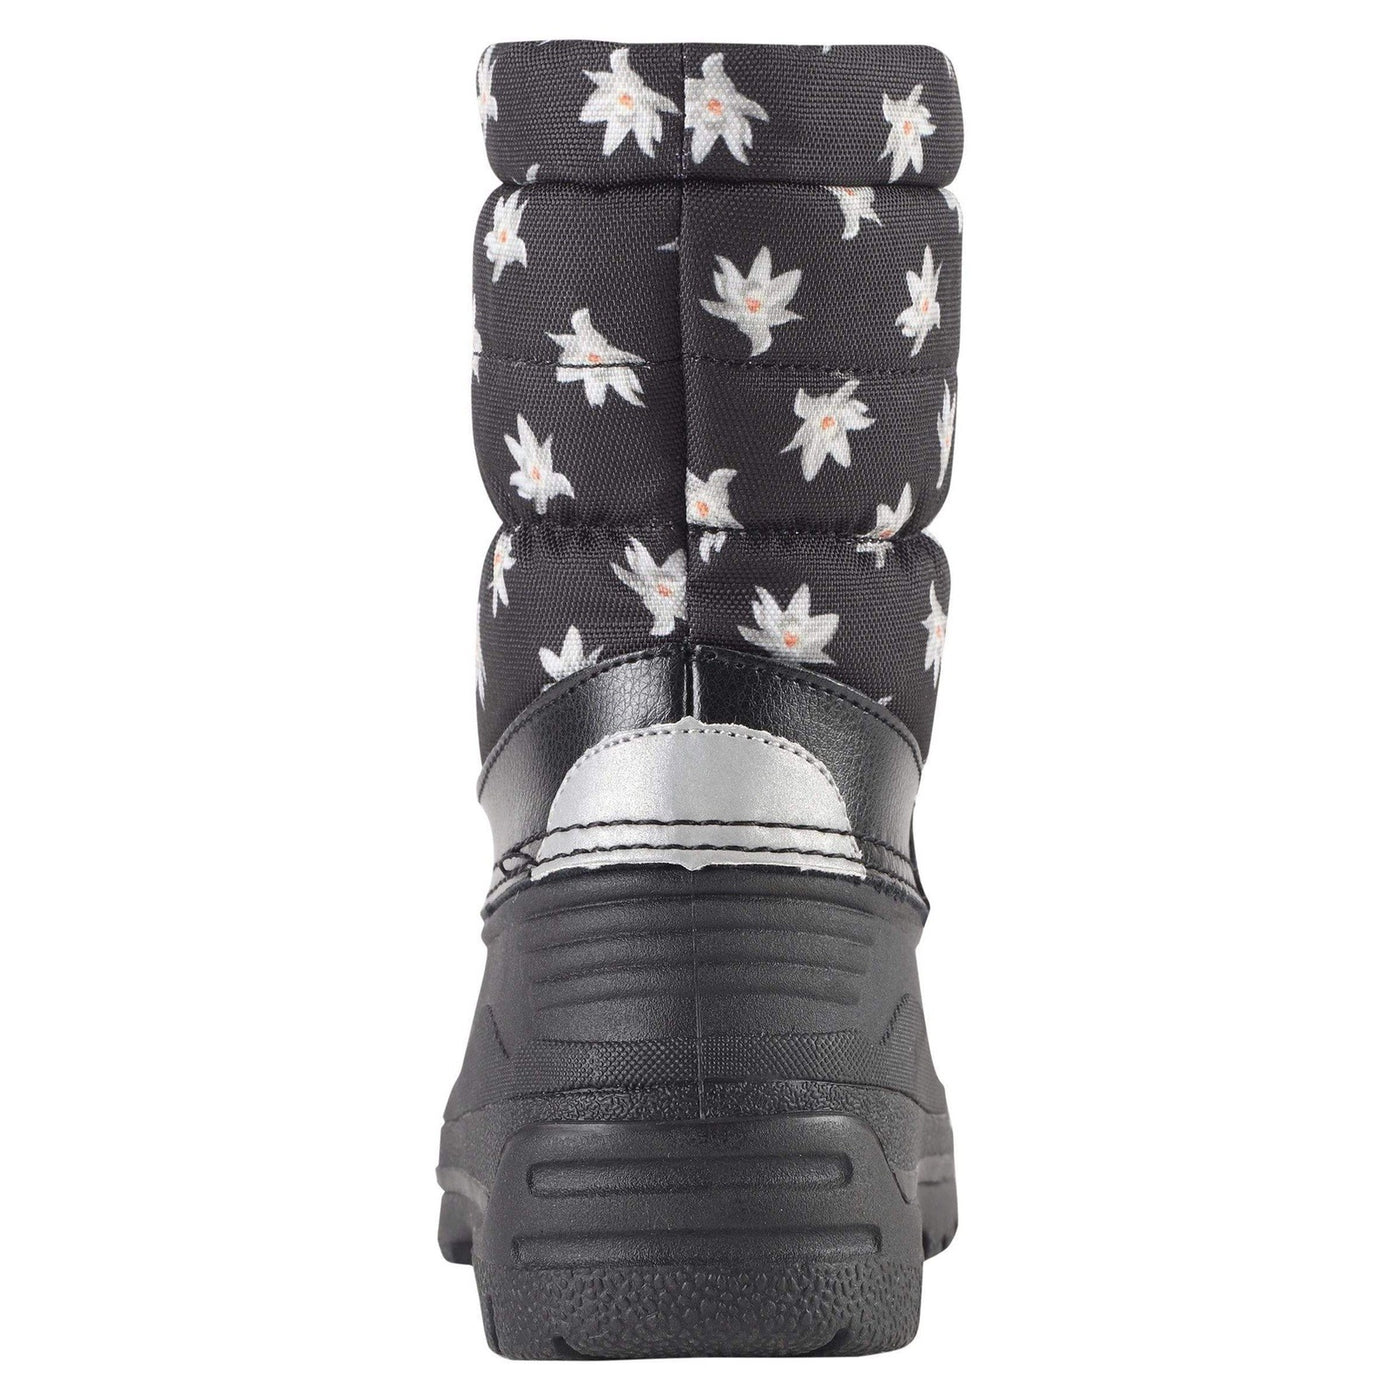 SnowKids Footwear Reima Nefar Water Resistant Winter Boots - Black Daisies